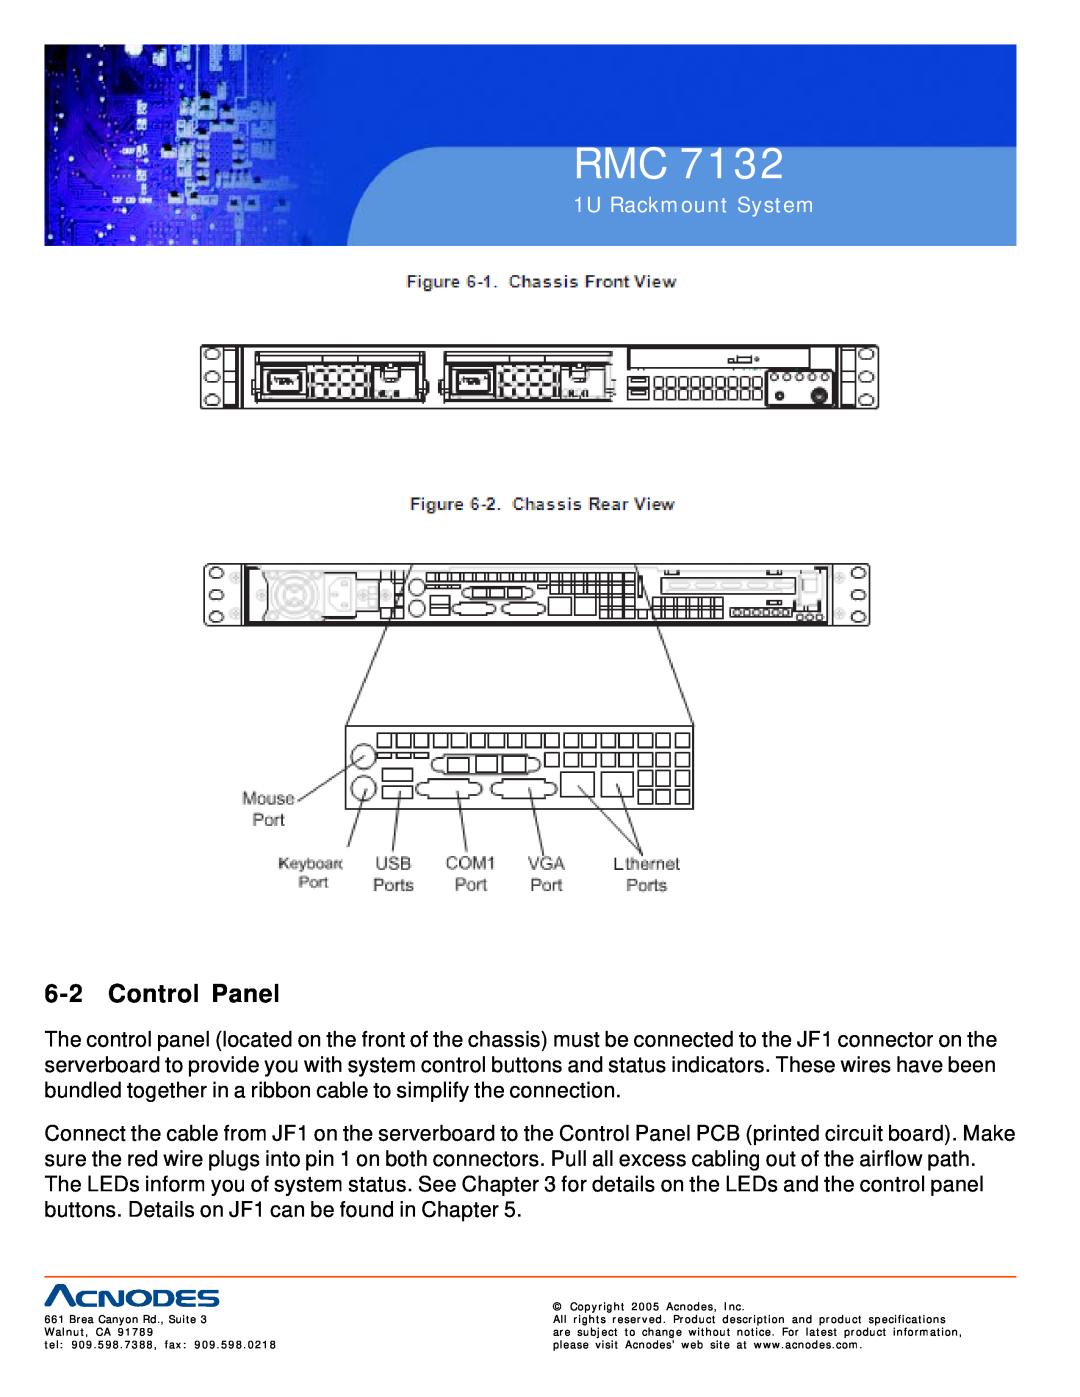 Acnodes RMC 7132 user manual Control Panel, 1U Rackmount System 